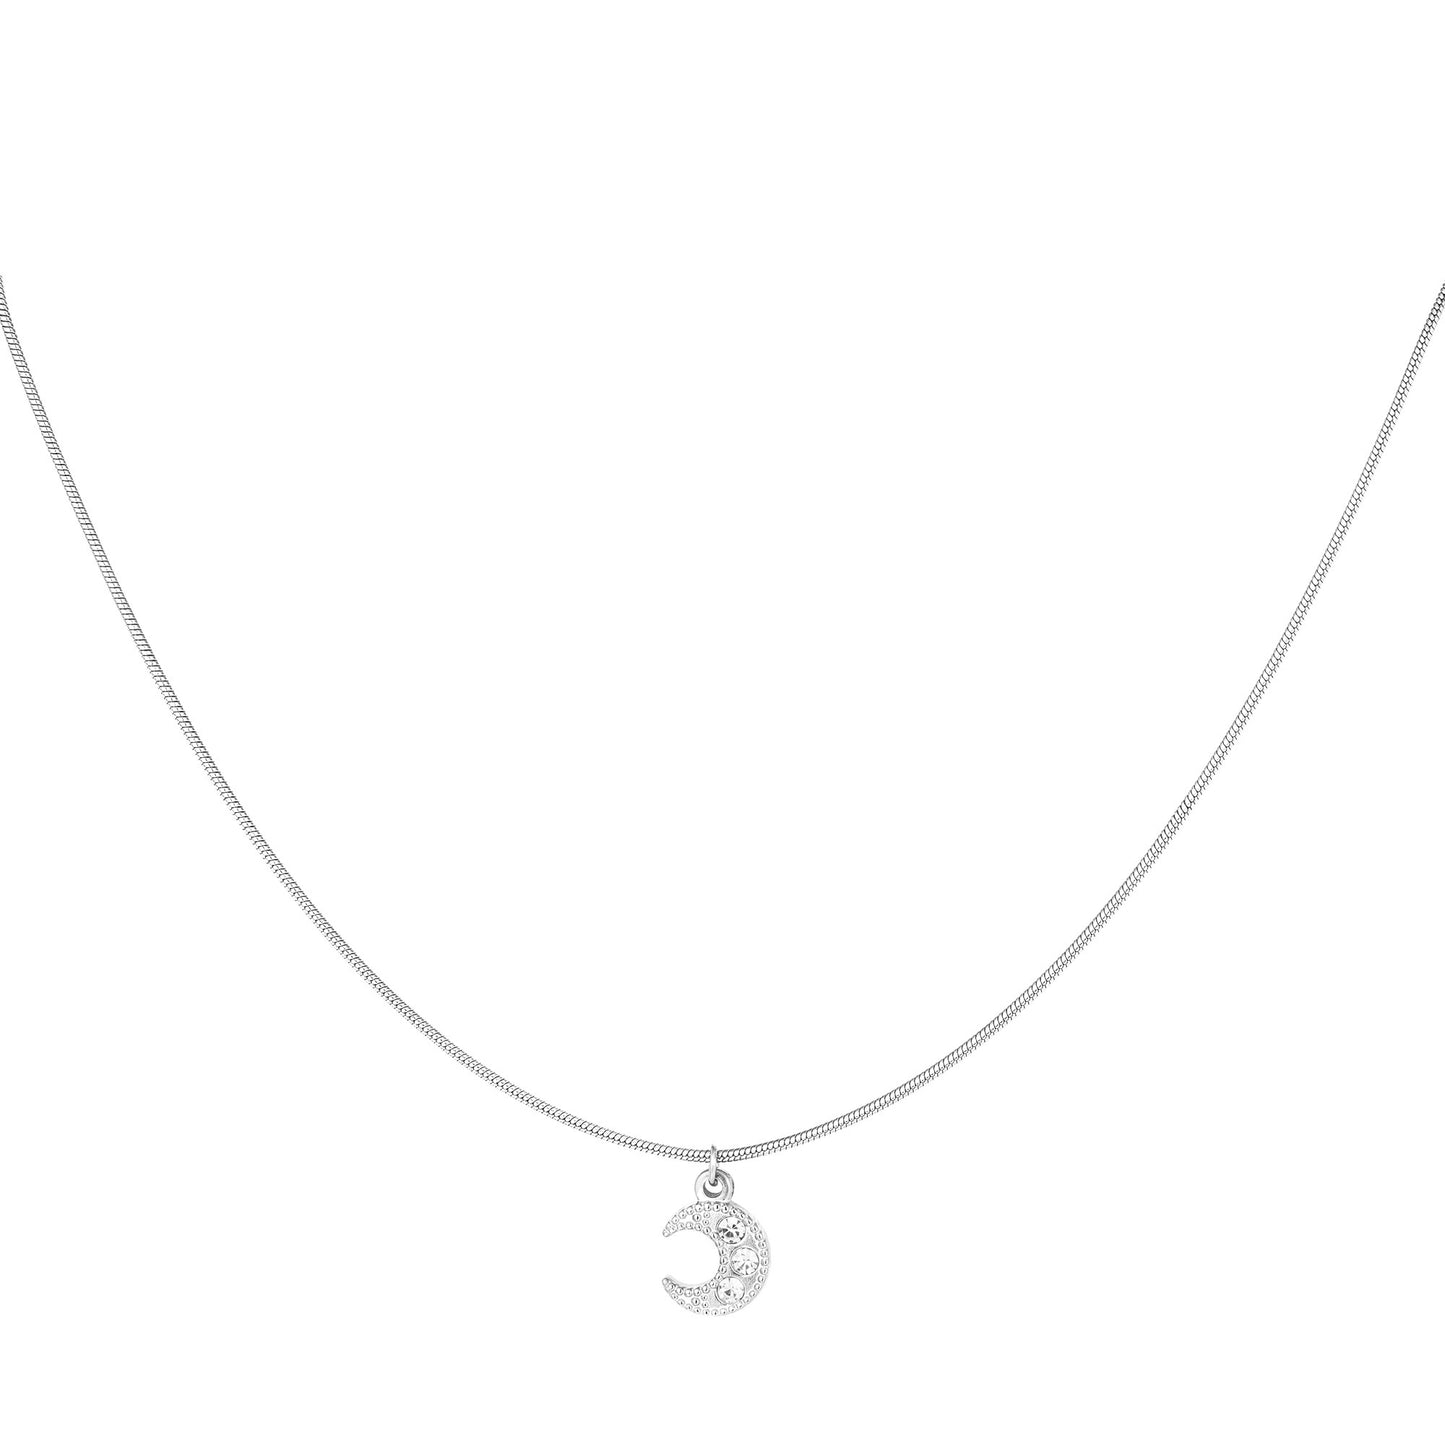 Shiny Moon Necklace Silver